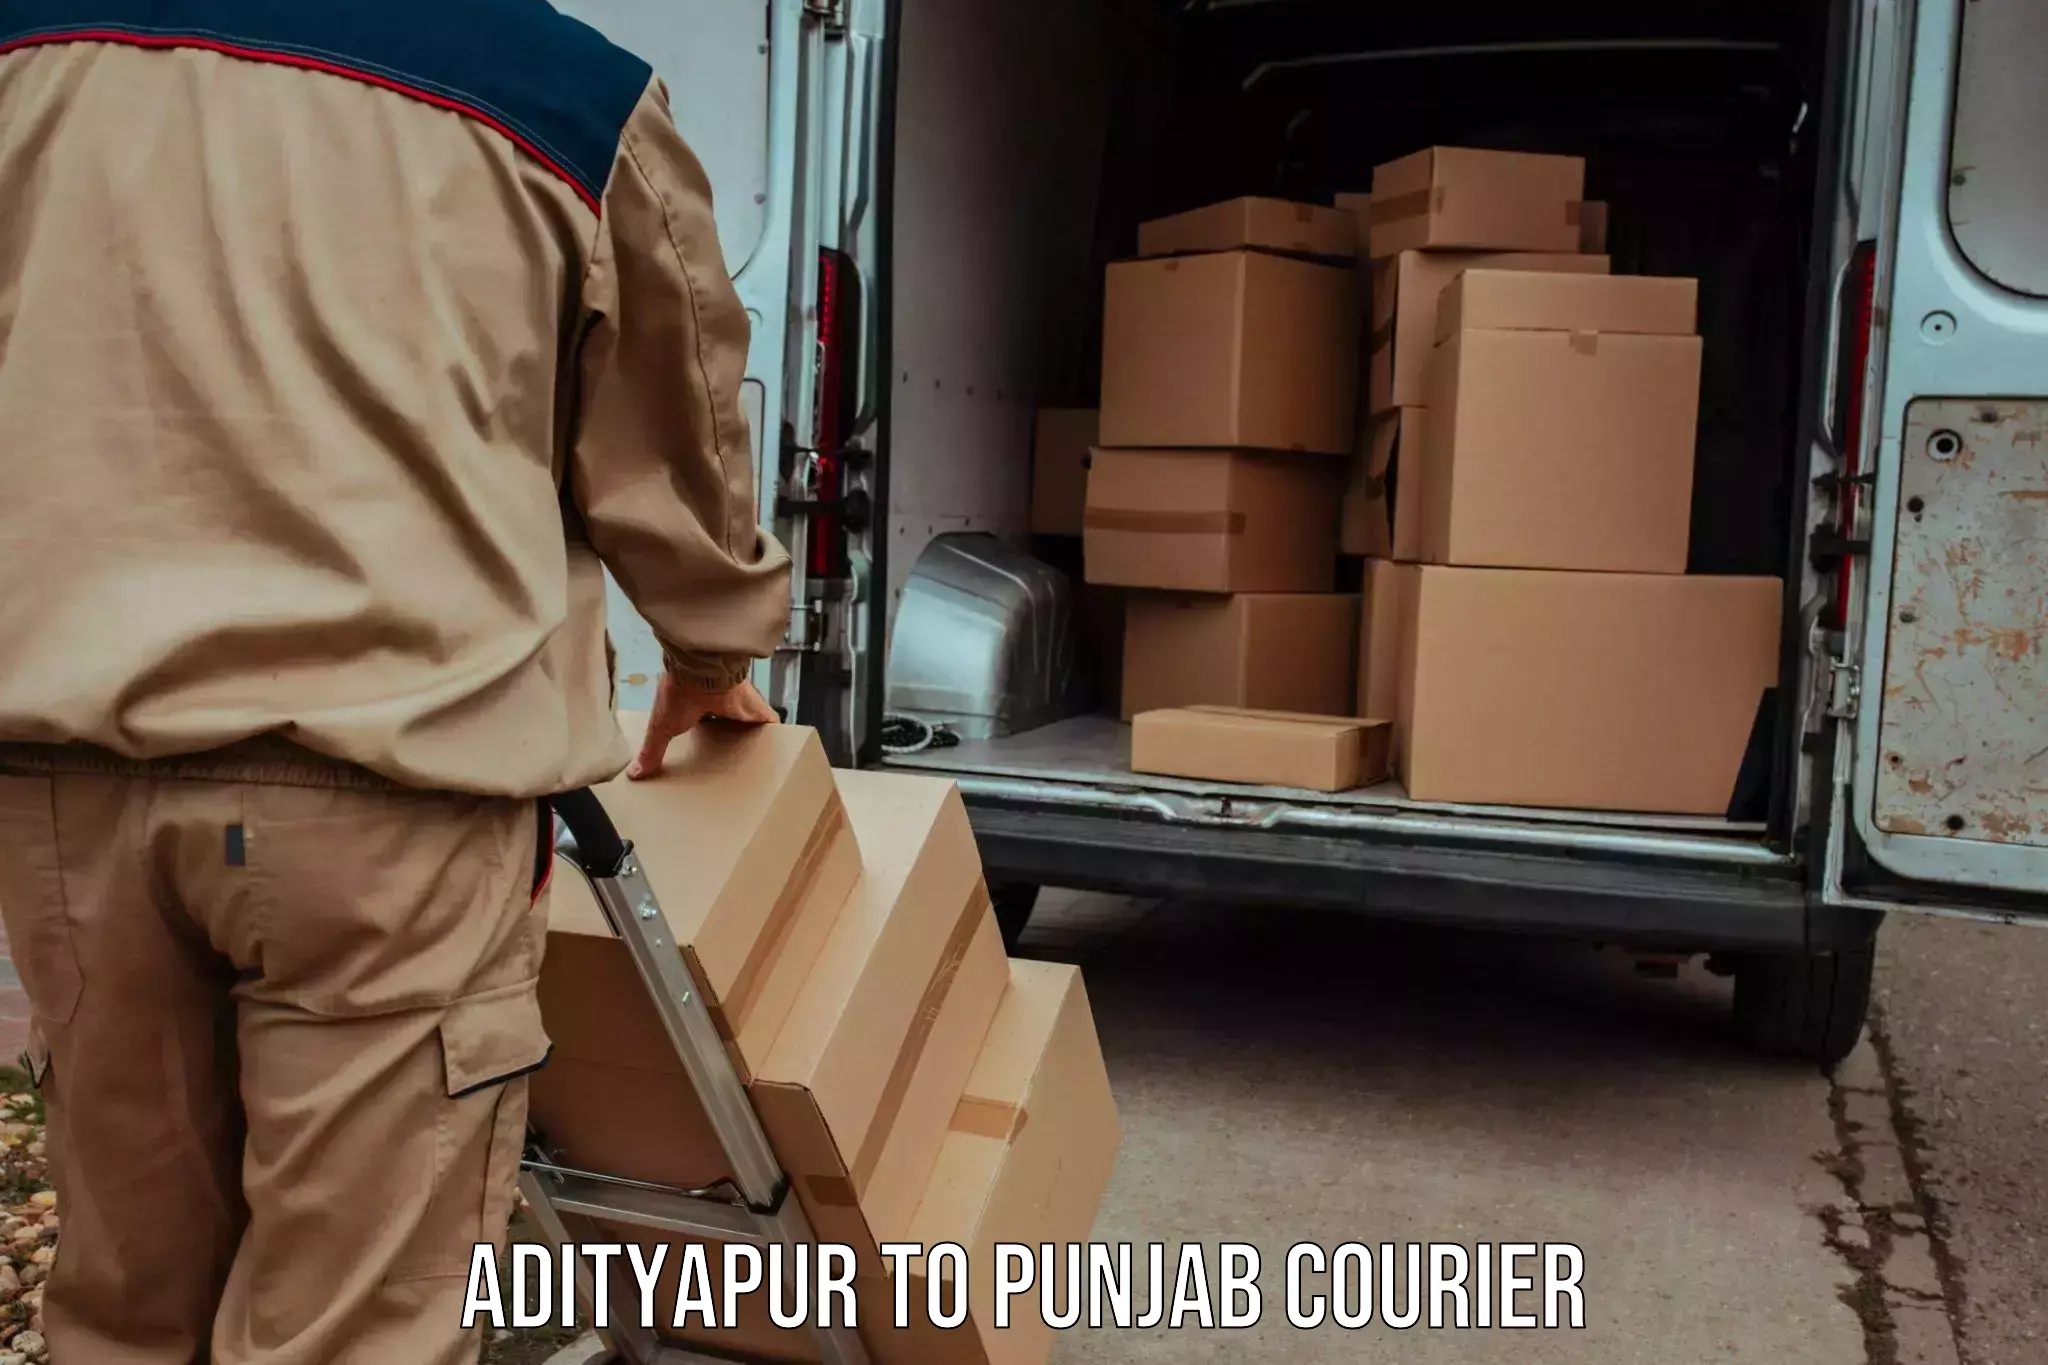 Reliable delivery network Adityapur to Talwandi Sabo